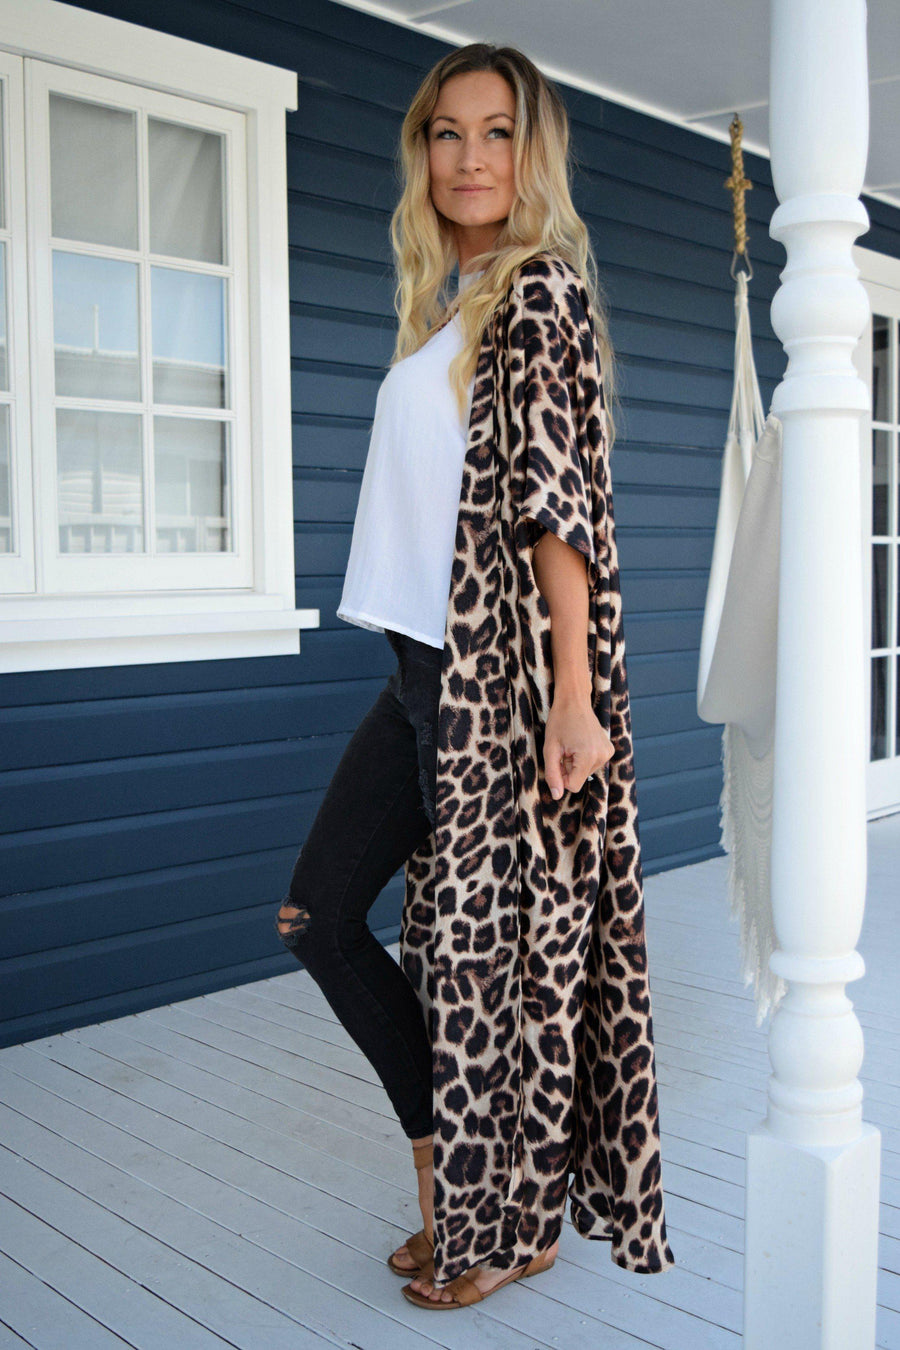 Chiara Silky Kimono in Leopard Print